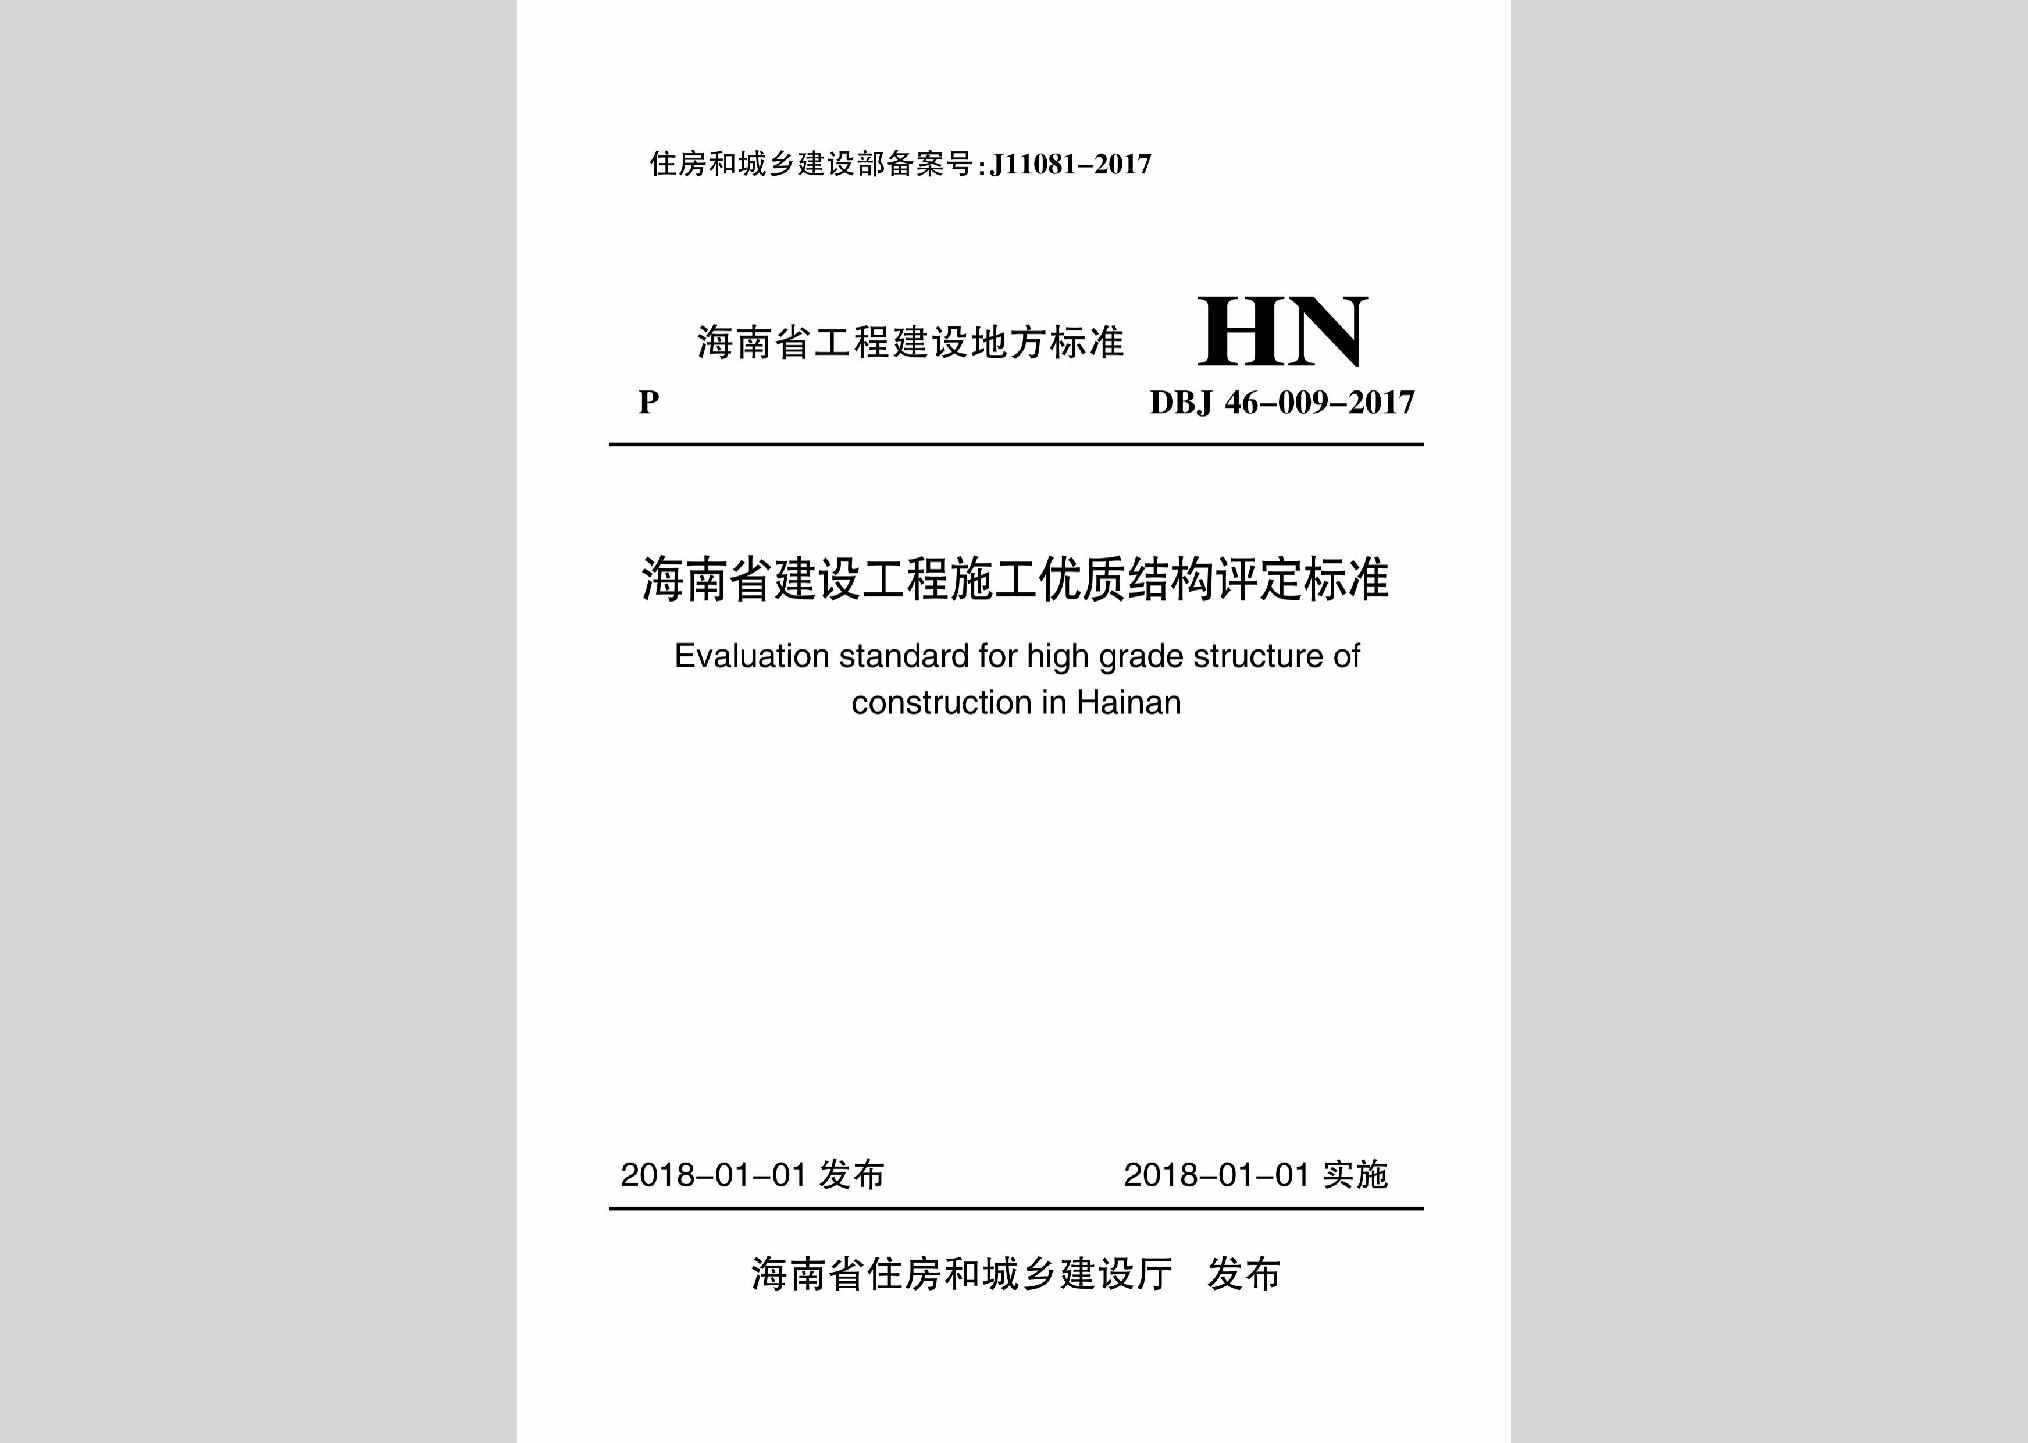 DBJ46-009-2017：海南省建设工程施工优质结构评定标准